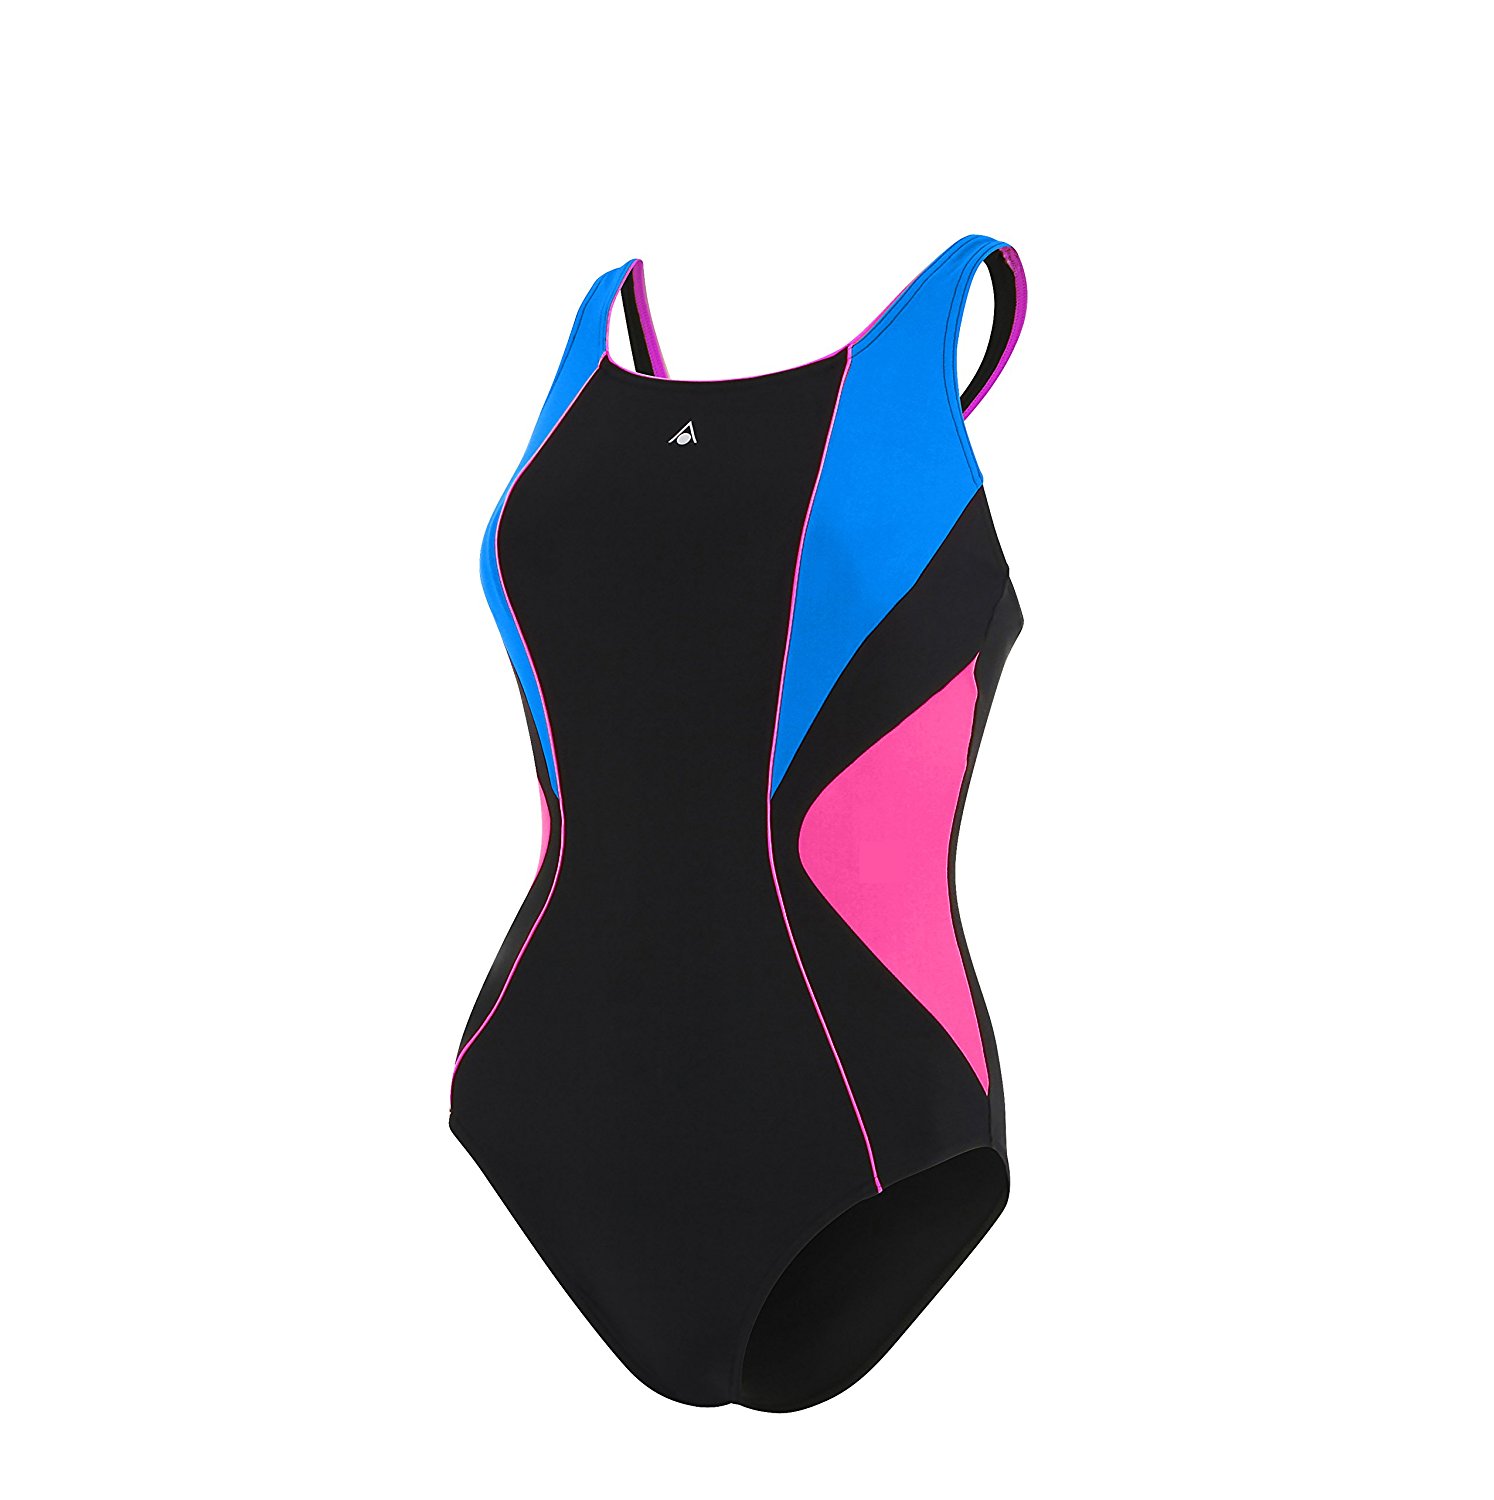 Aquasphere Women's Chelsea Swimming Costume - Black/Blue